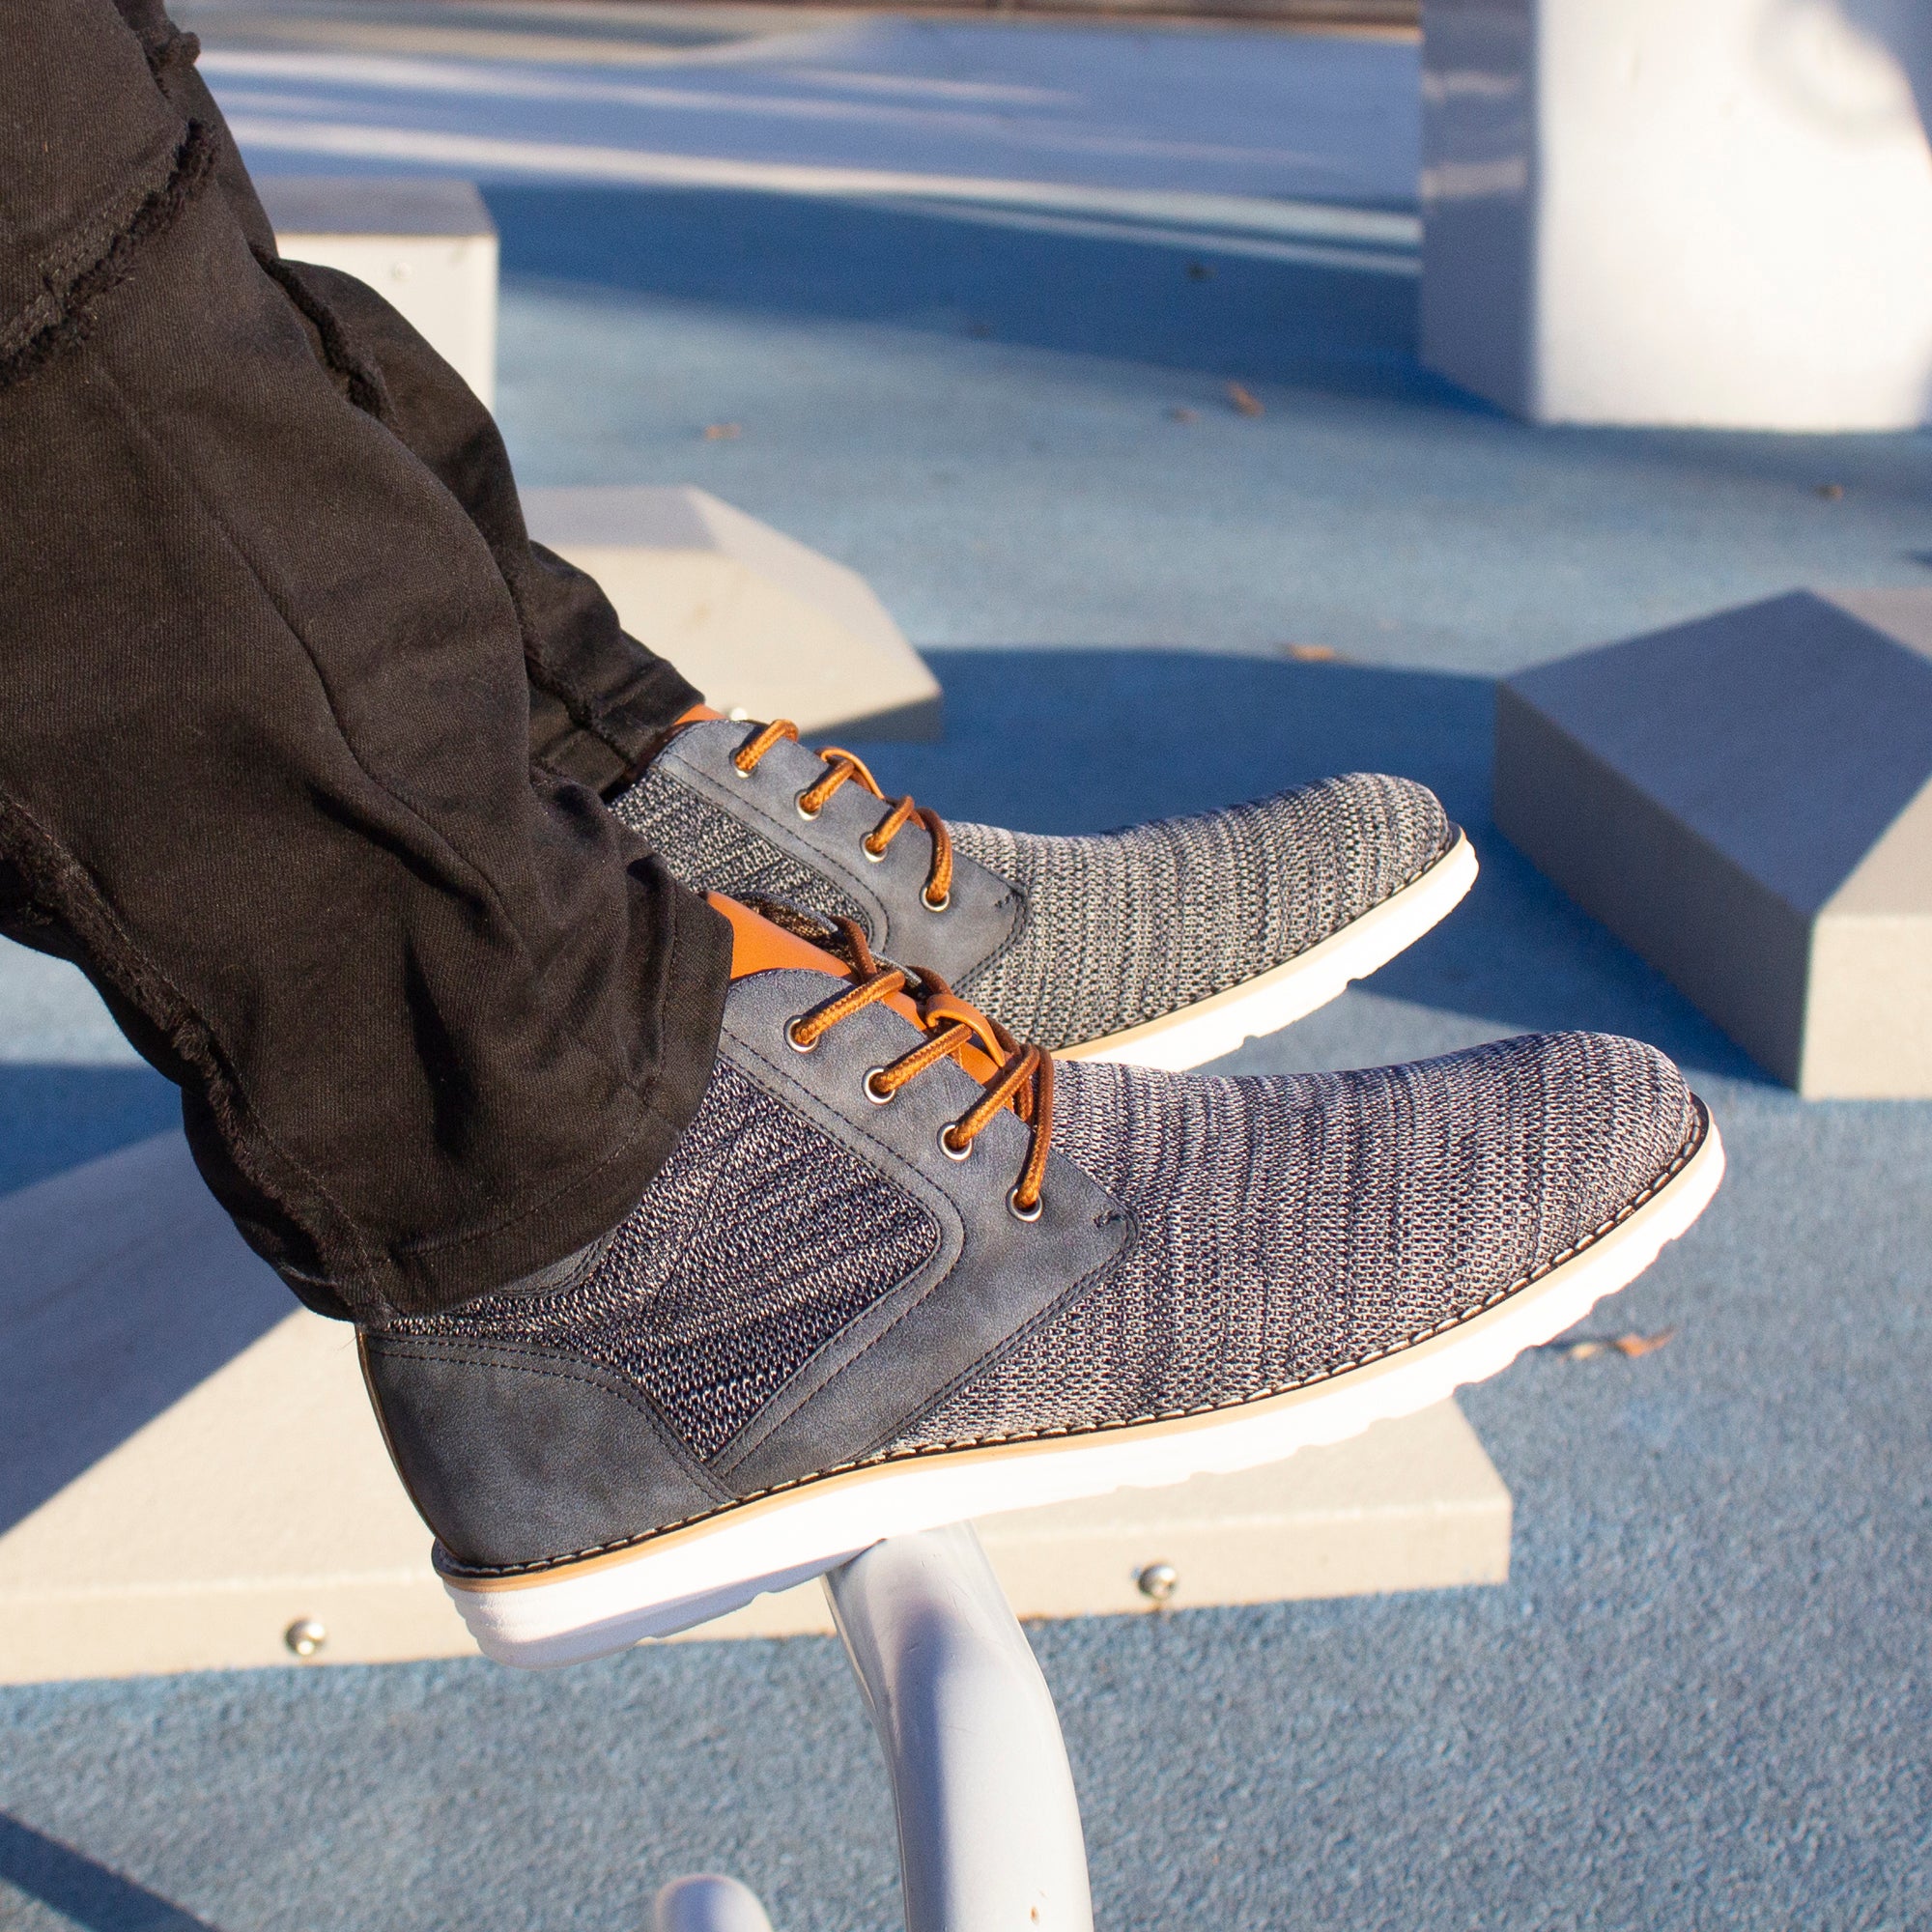 Duo-textured Sneaker Chukka Boots | Bohort by Polar Fox | Conal Footwear | Action Shot View